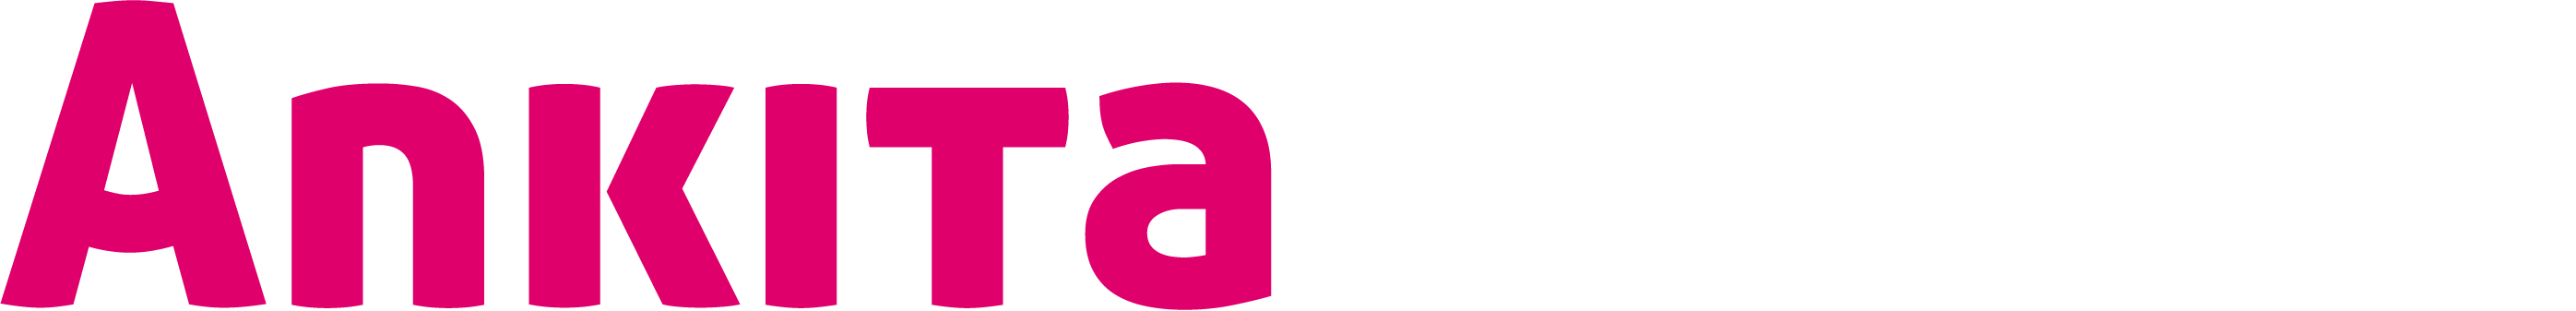 ankita escort logo